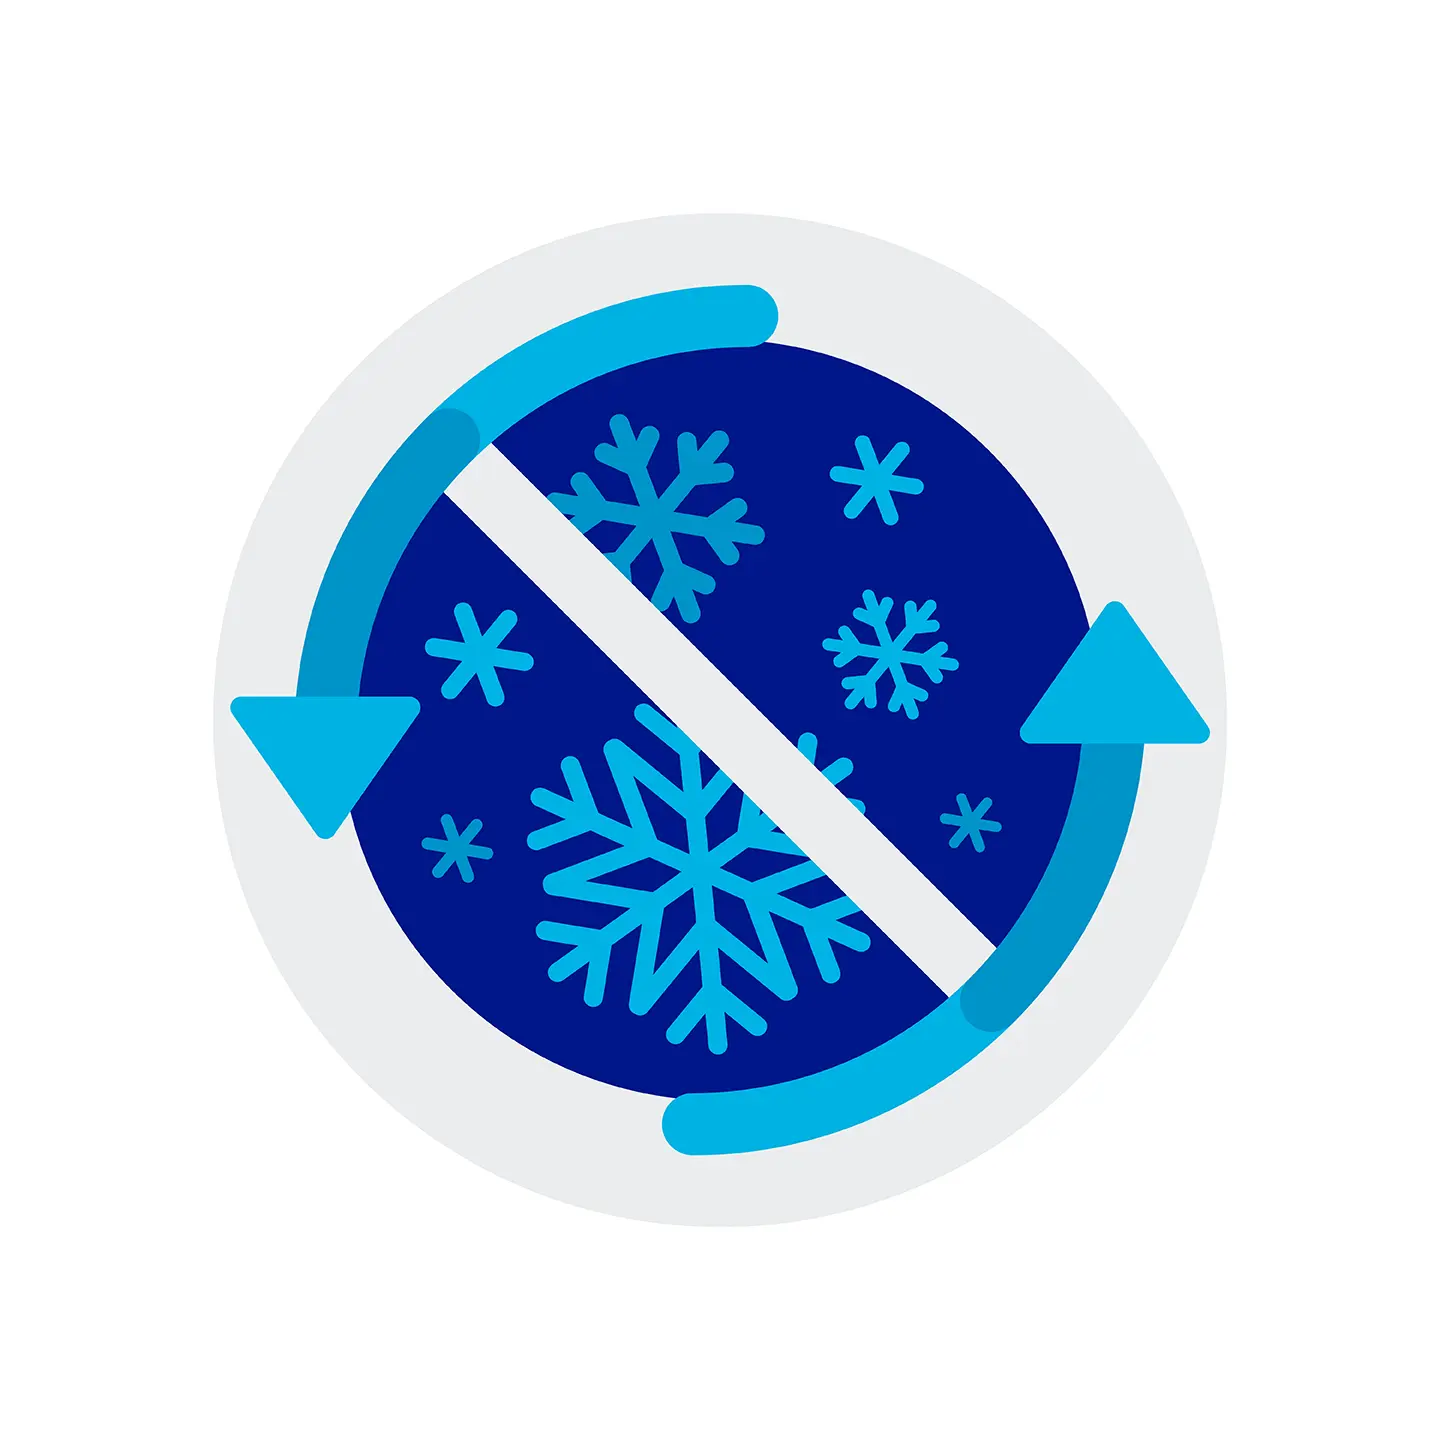 Snowflakes with "no" symbol